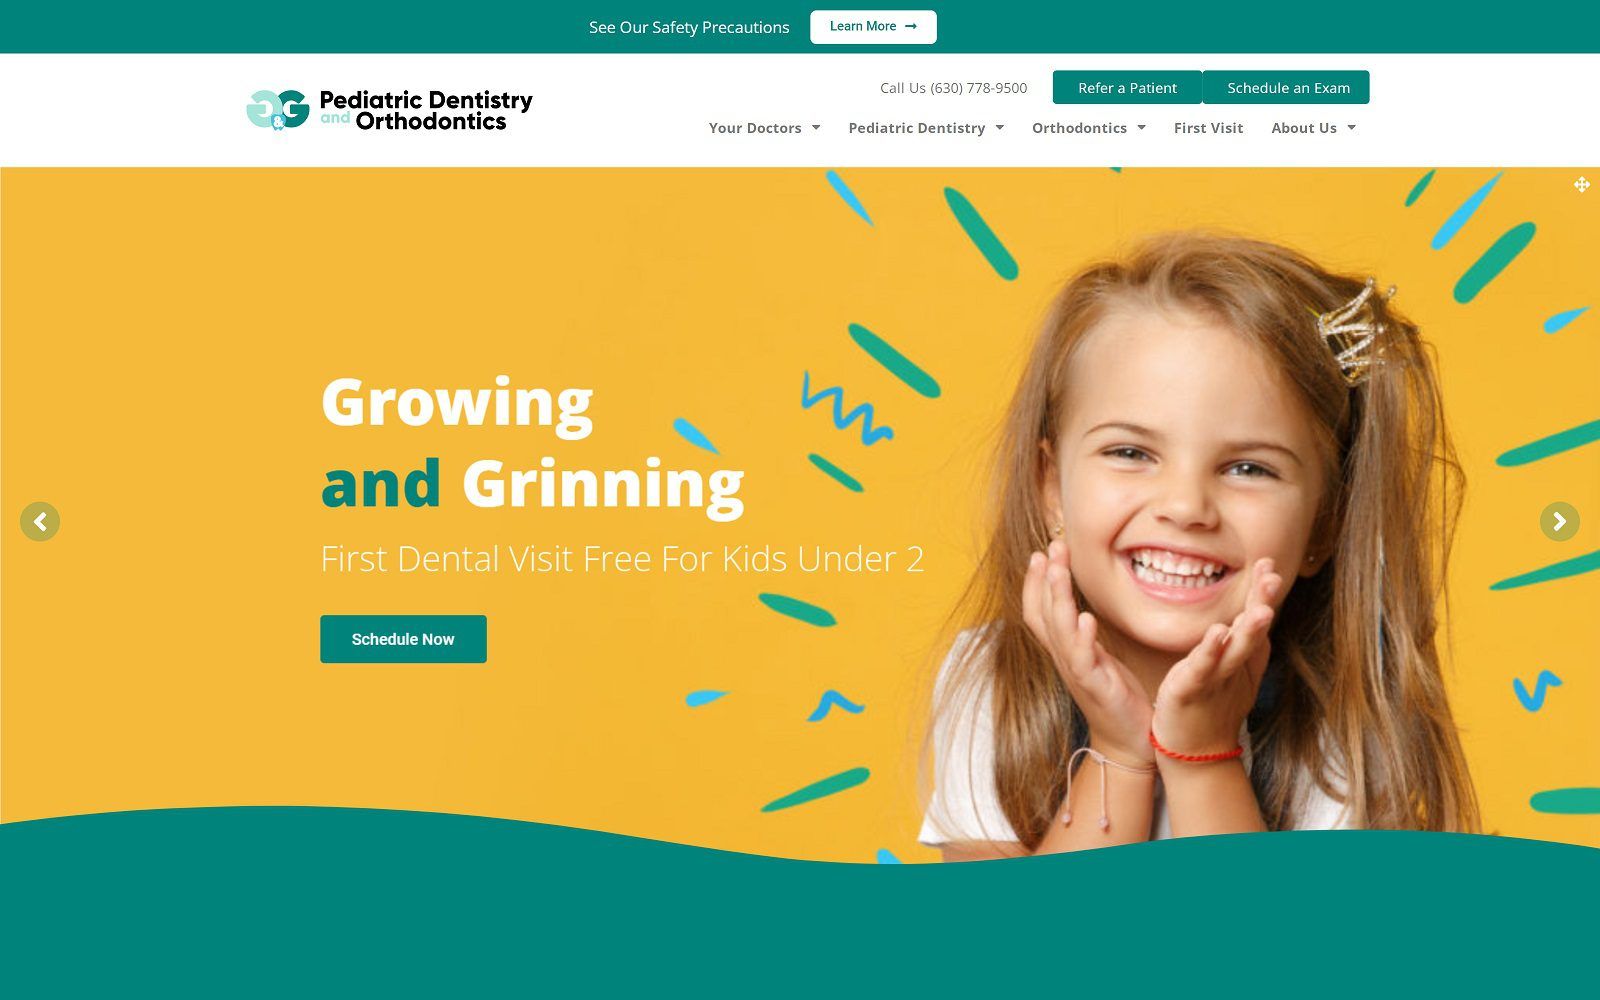 The screenshot g&g pediatric dentistry and orthodontics website